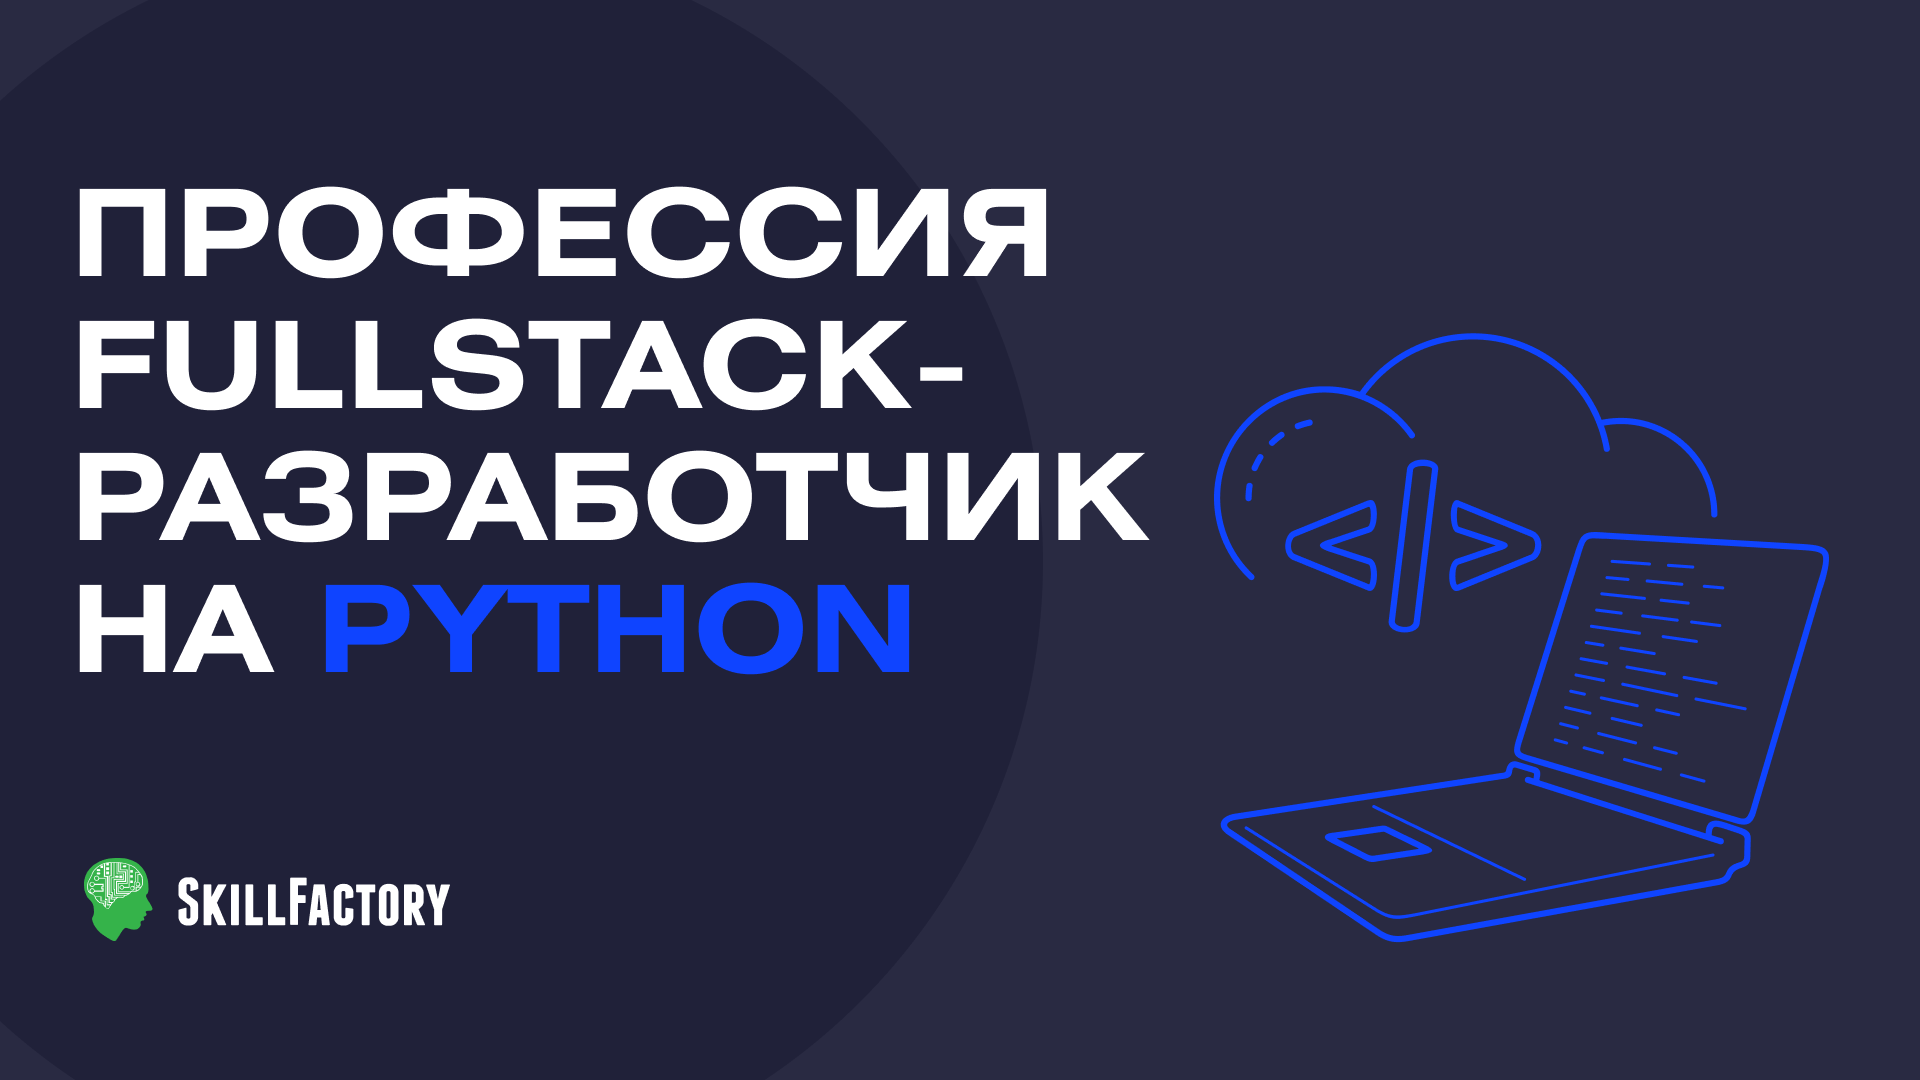 Профессия Fullstack-разработчик на Python python разработчик